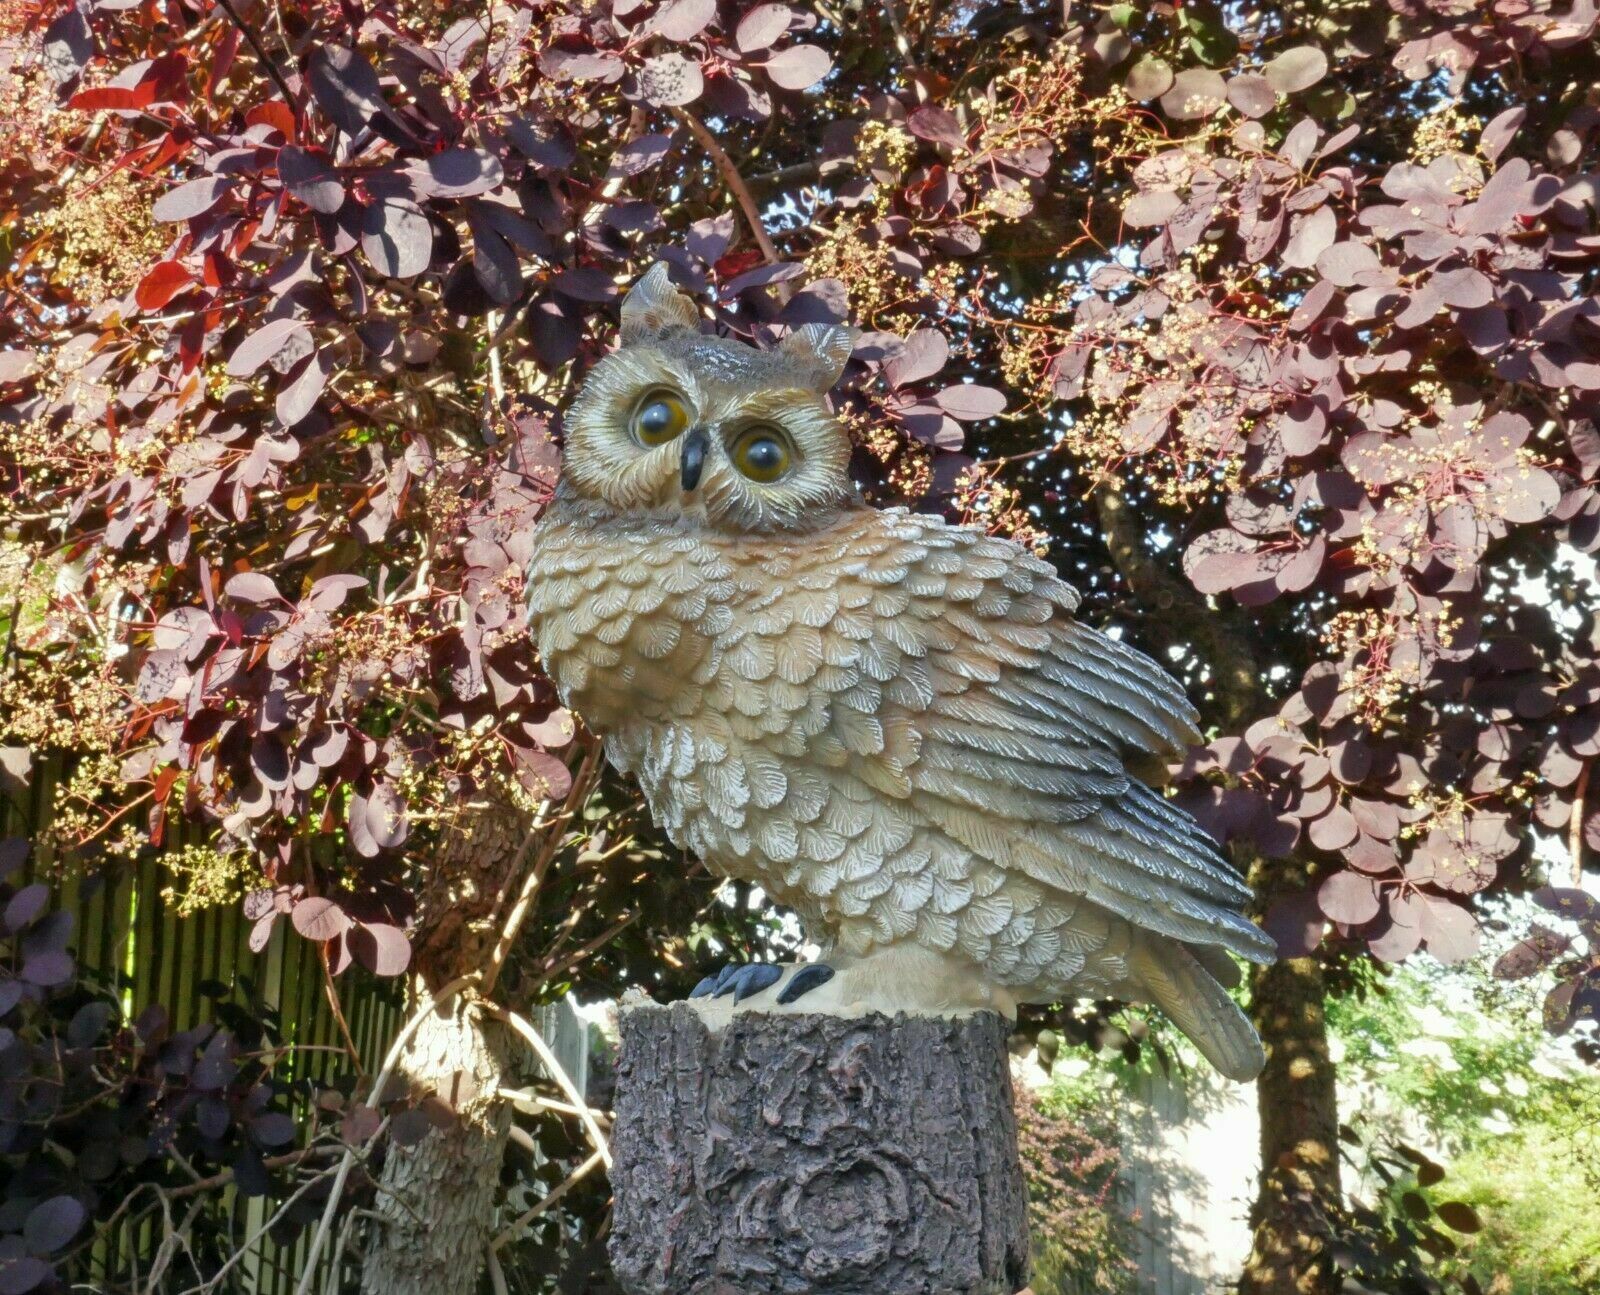 Owl Duck Rustic Metal Resin Bird Wall Mounted Bird Garden Animal Ornament Gift